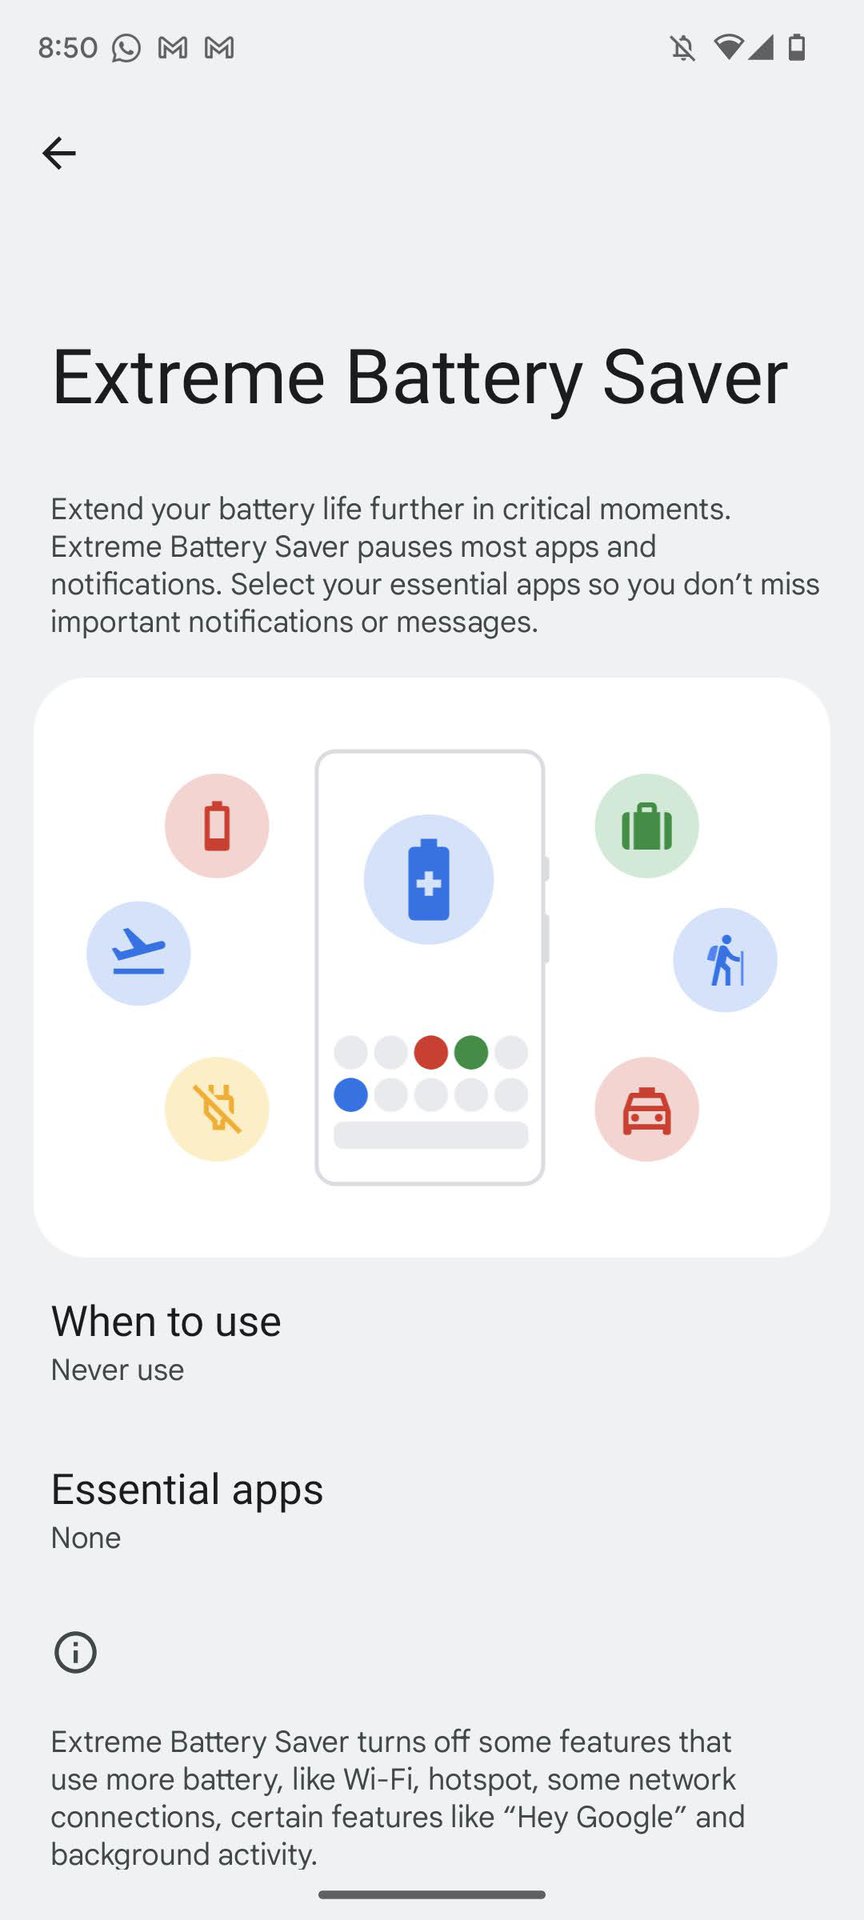 The Extreme Battery Saver menu on Google Pixel